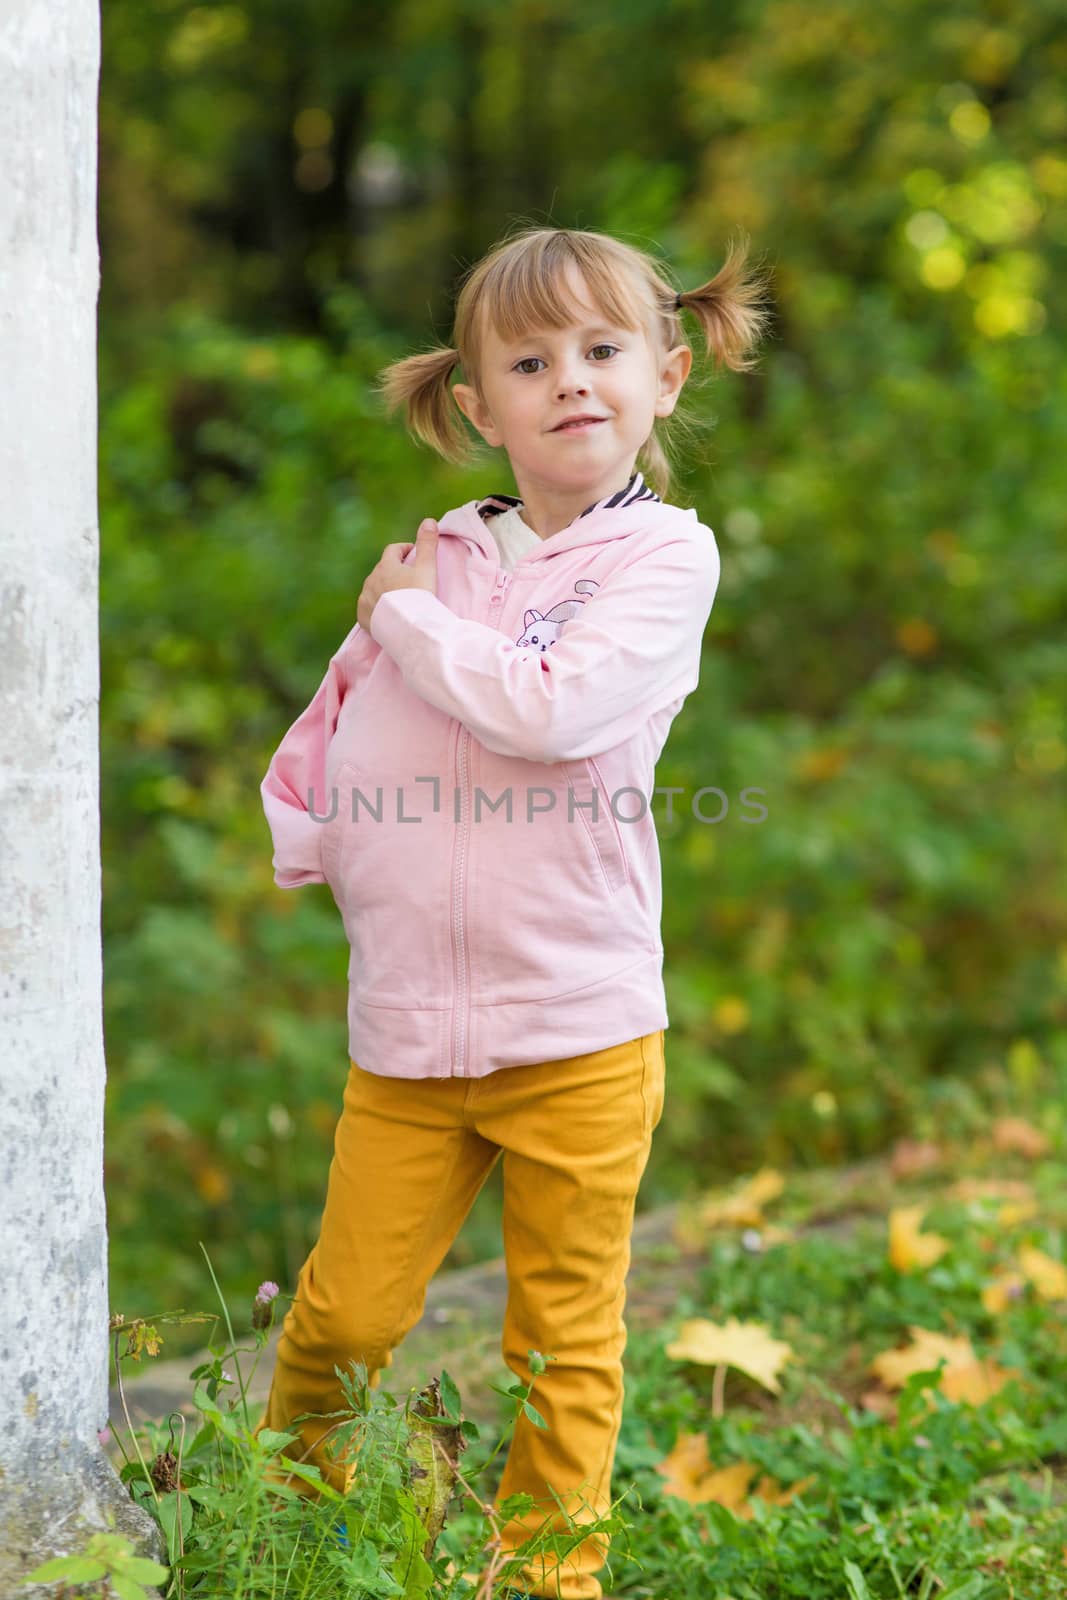 .A girl with a broken arm stands near a column in an old park on an autumn walk